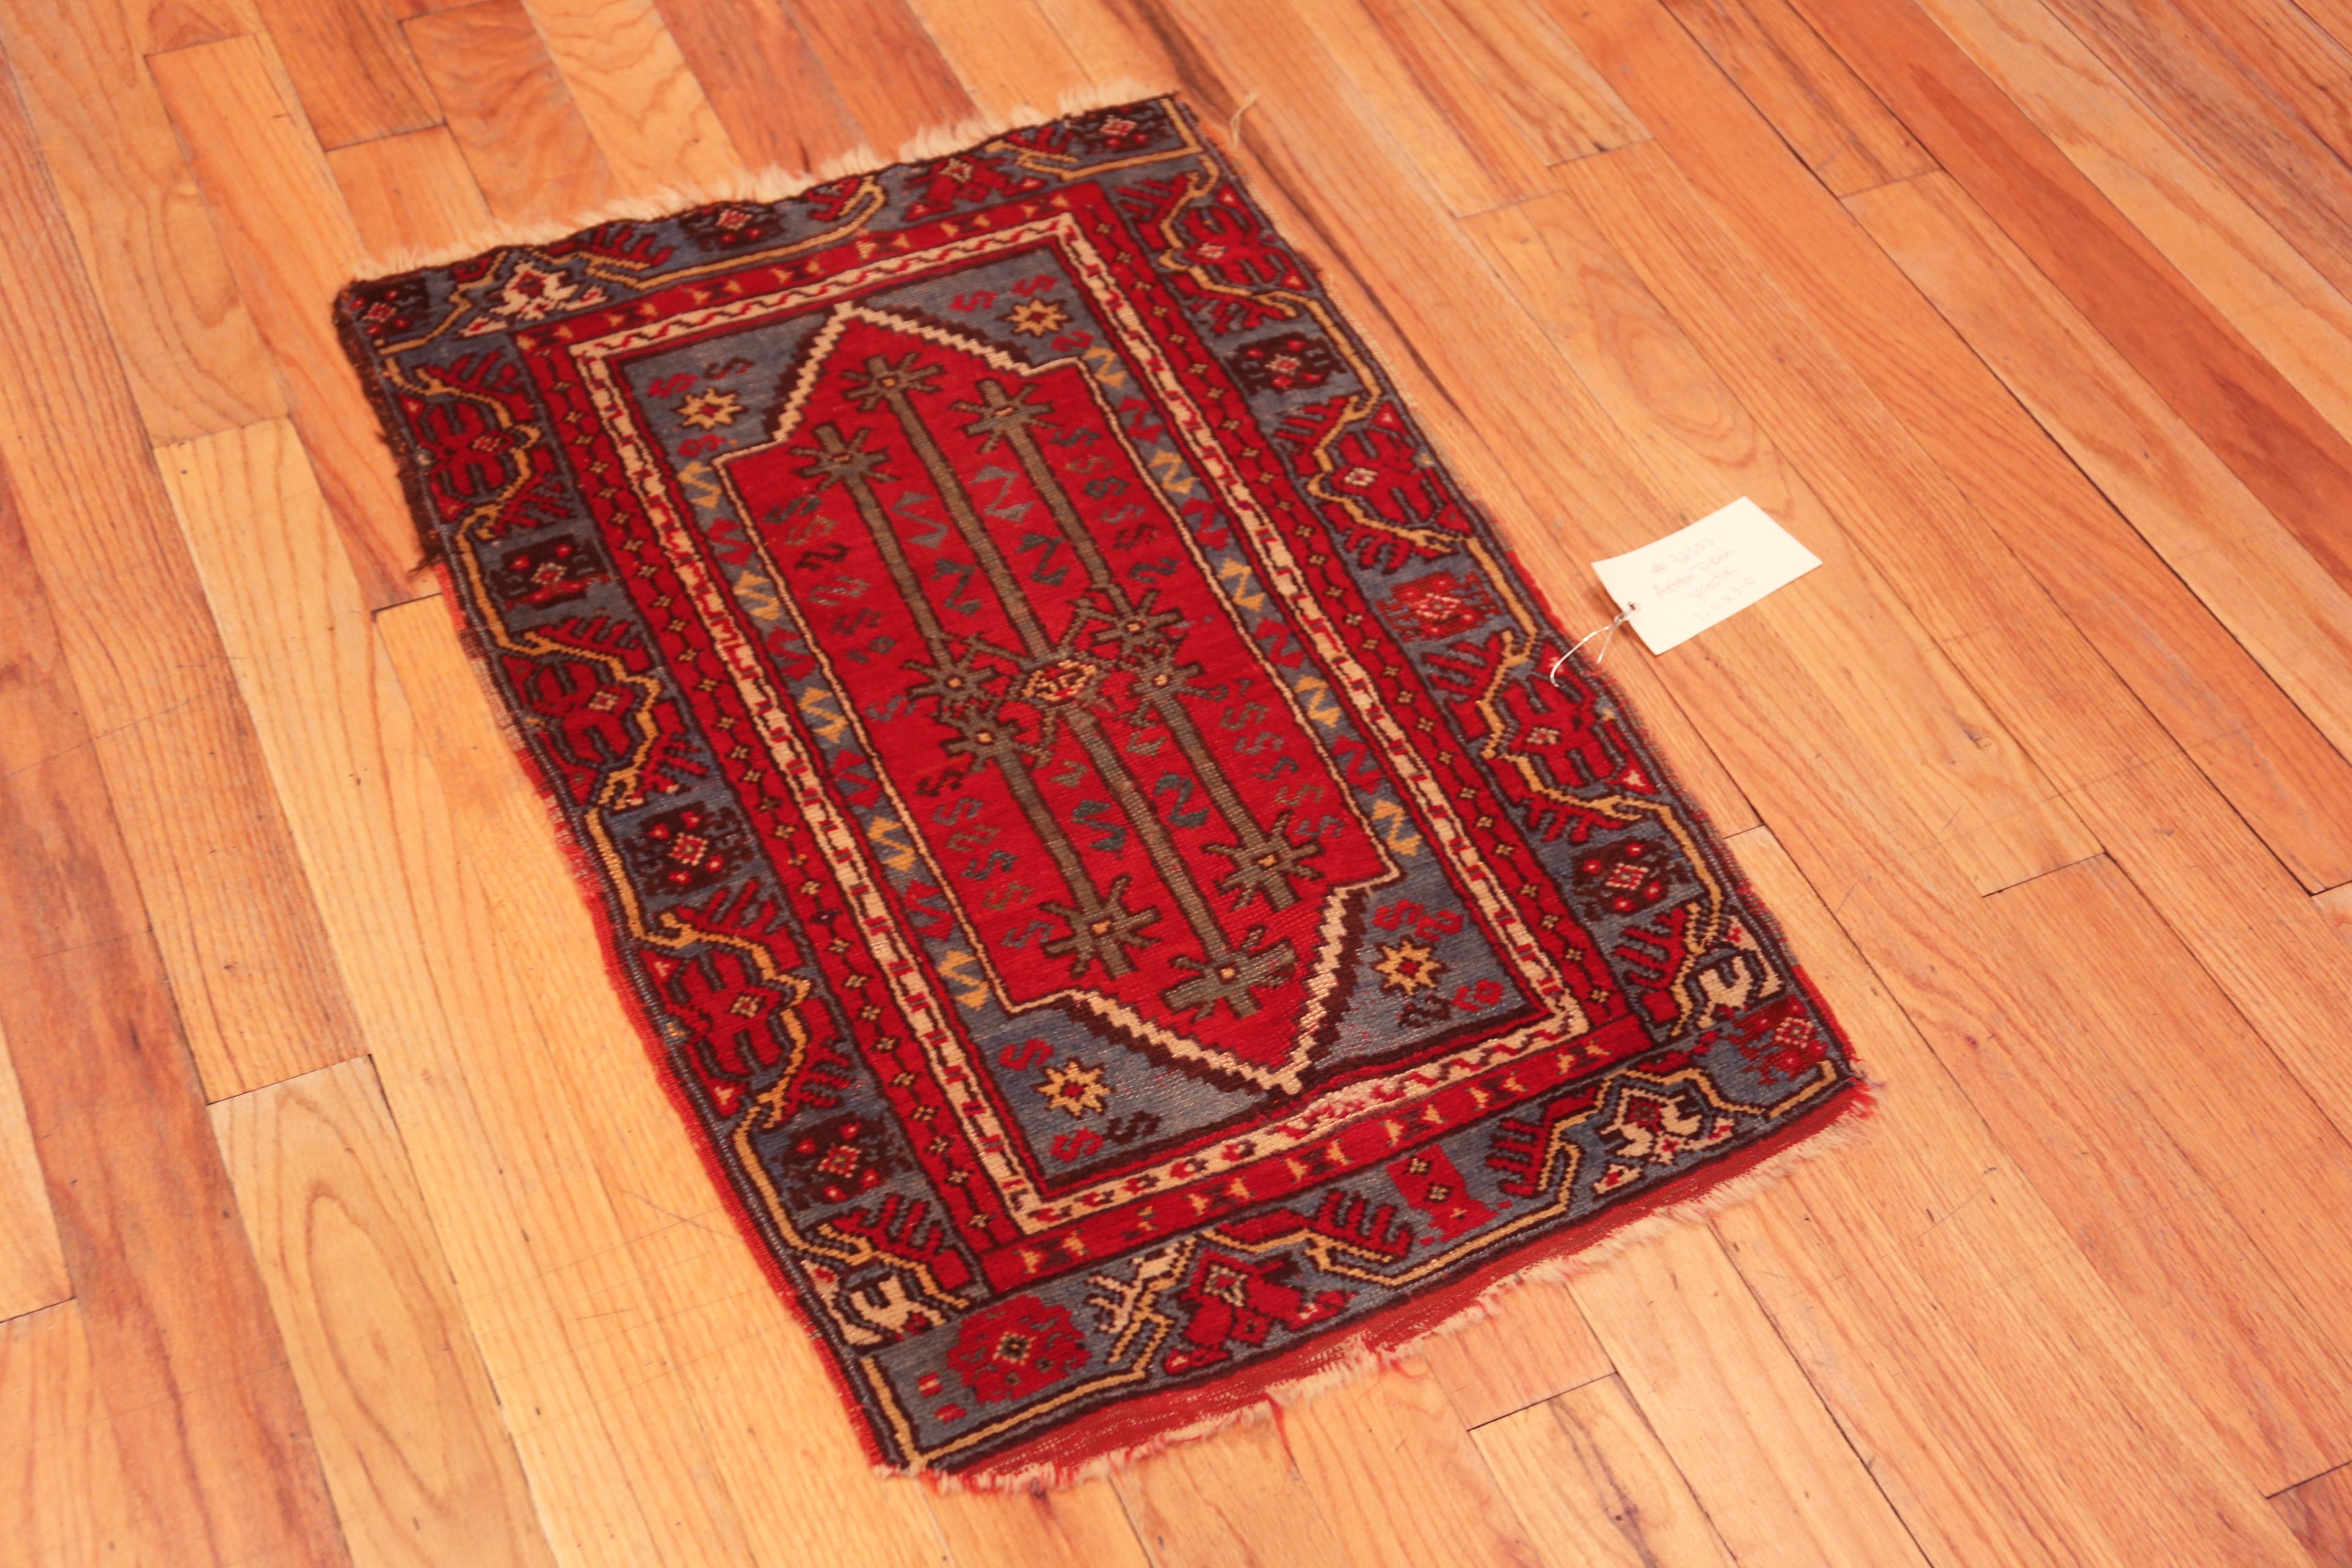 Ravissant petit tapis rouge bleu tribal géométrique, ancien tapis turc Yastic, Pays d'origine : Tapis turc, Circa date : 1900